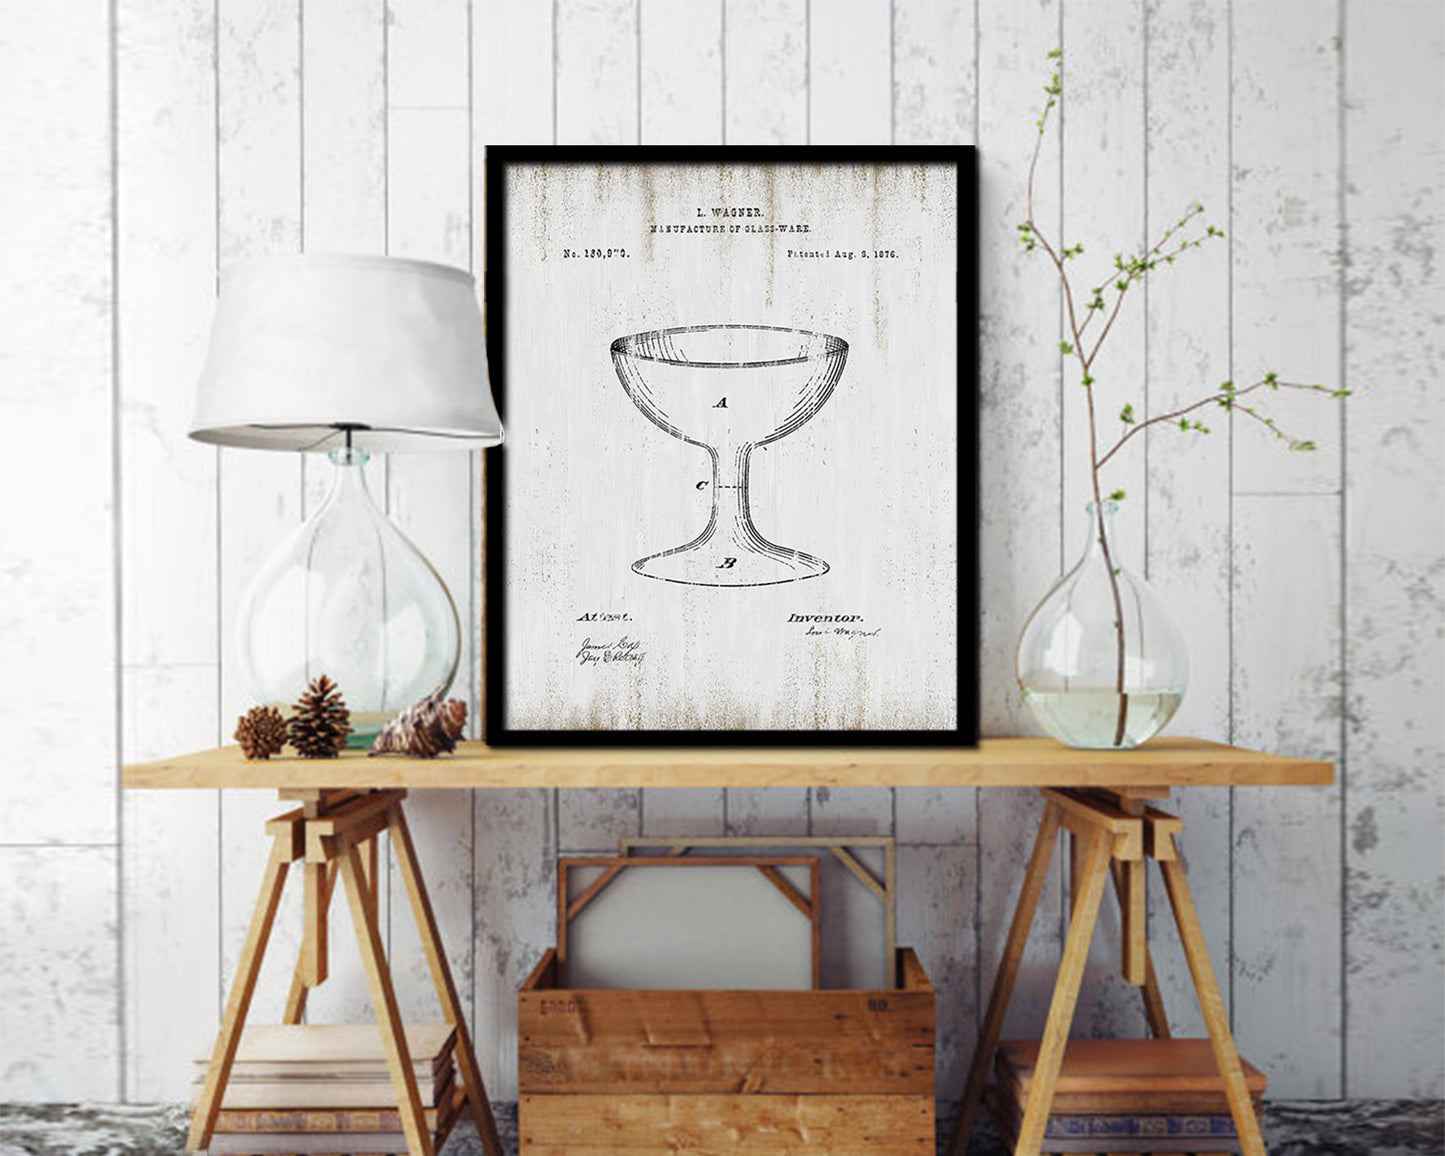 Manufacture of Glassware Wine Vintage Patent Artwork Black Frame Print Gifts